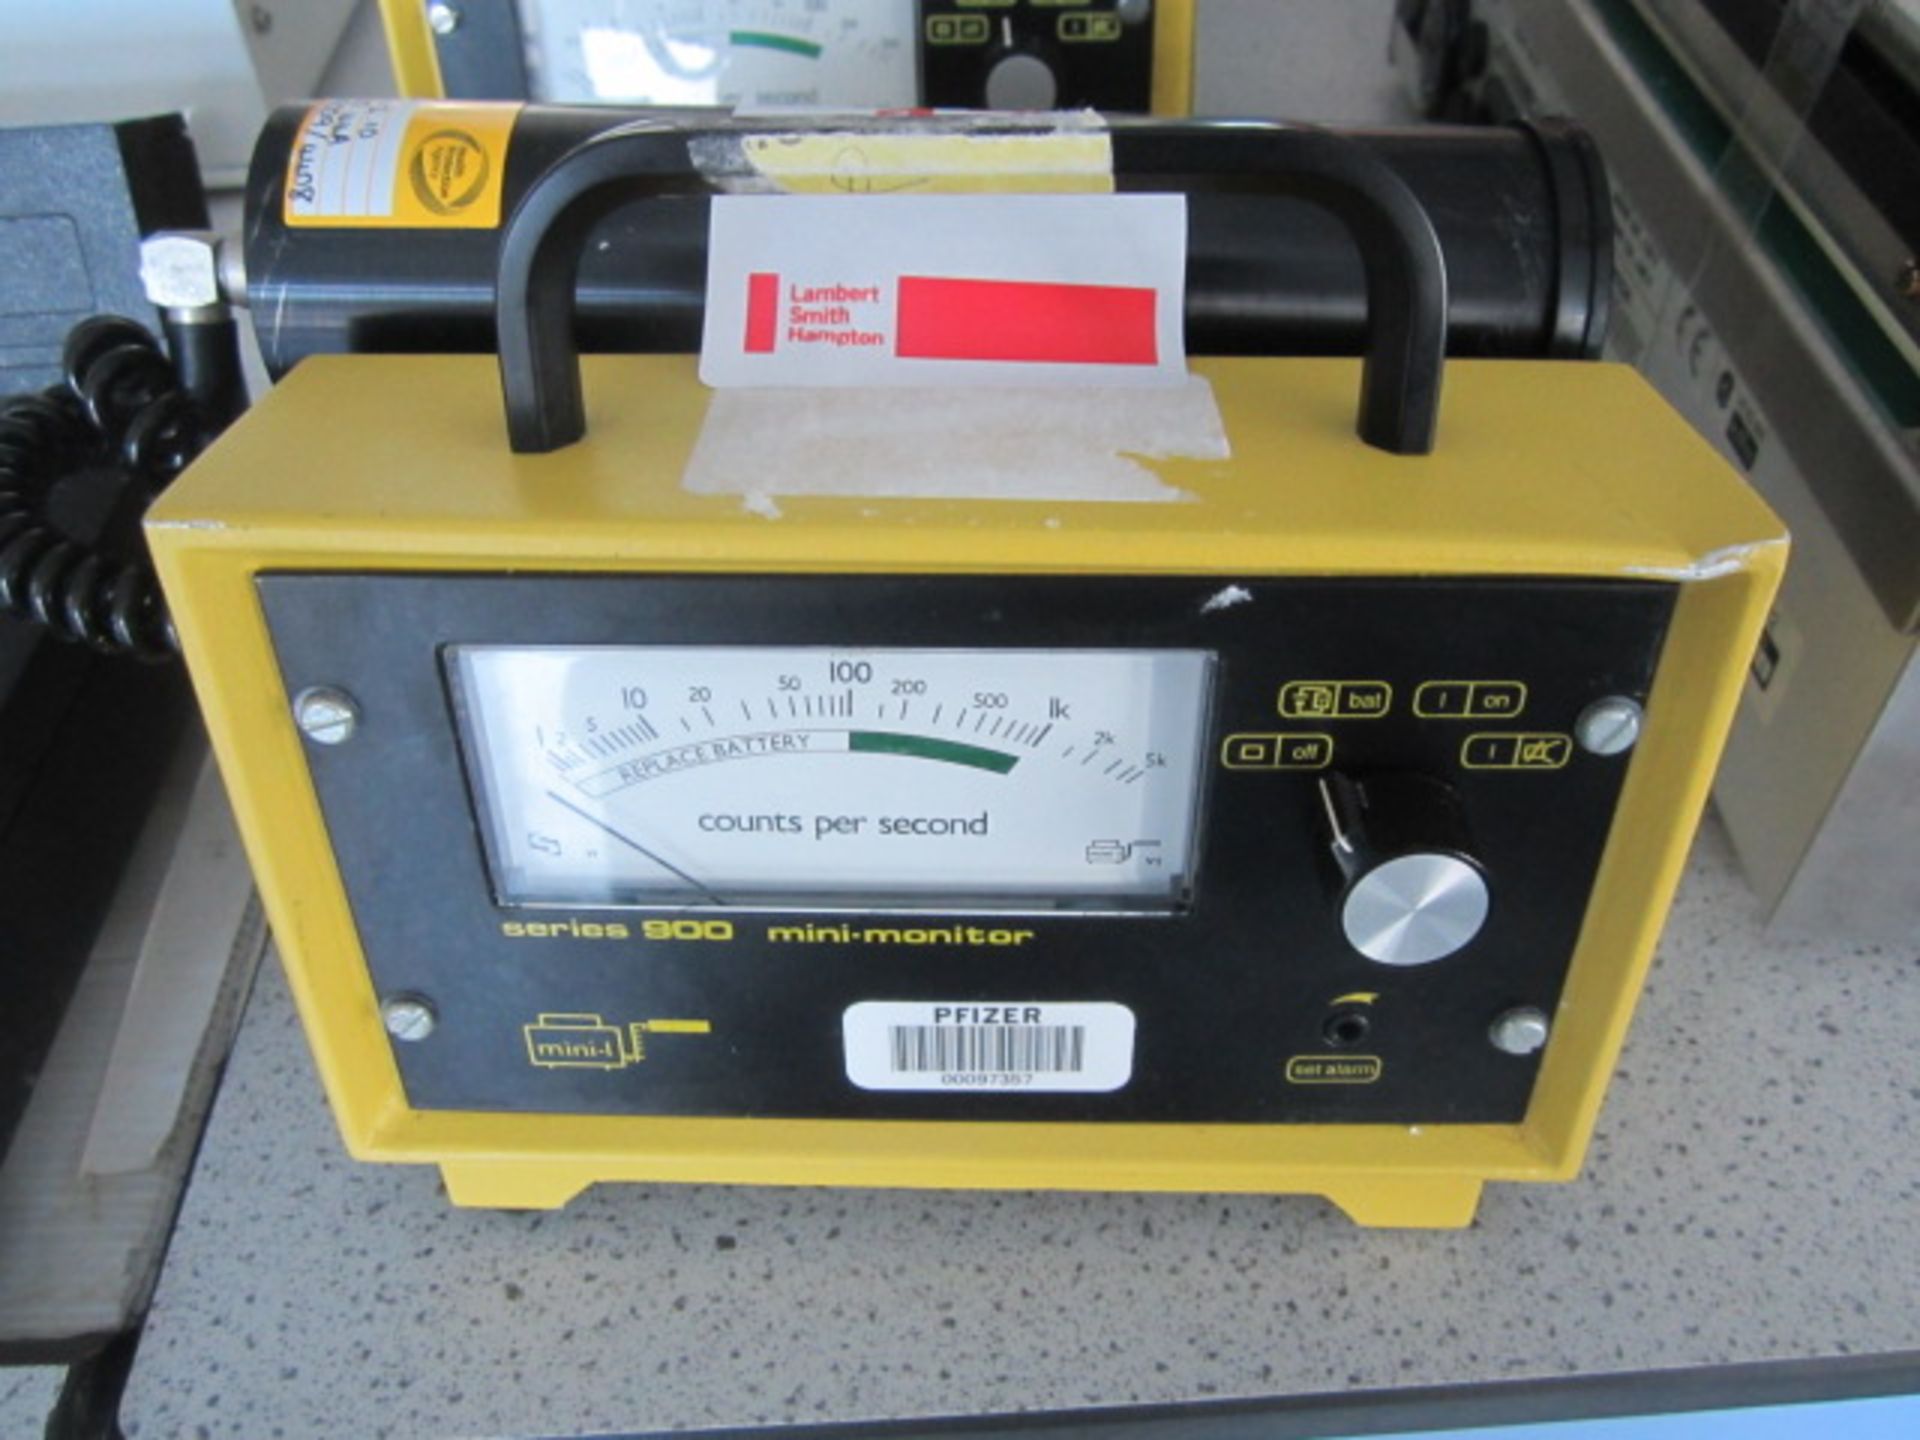 Thermo Scientific 900 Series portable radiation mini monitor (height 130mm x width 120mm x depth